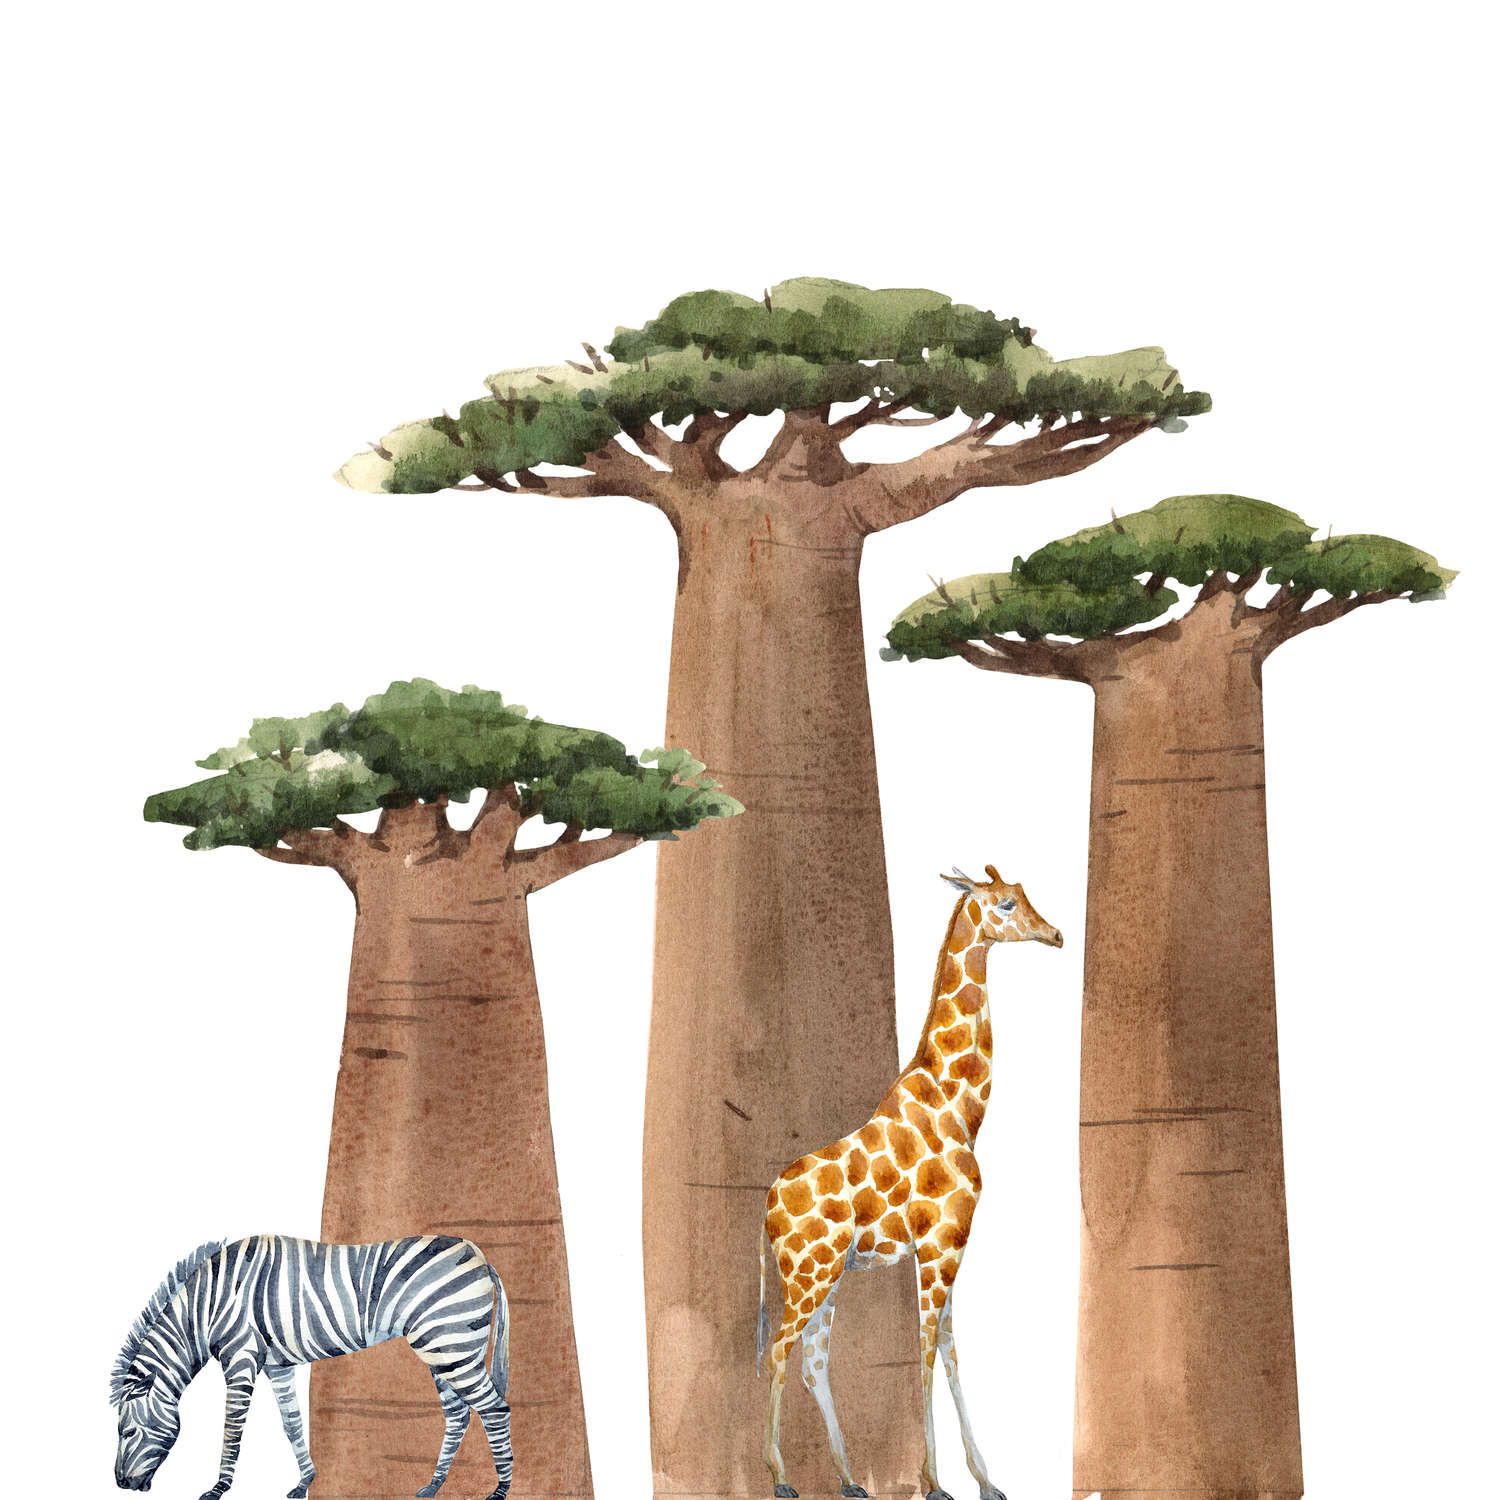             Photo wallpaper Savannah with Giraffe and Zebra - Textured non-woven
        